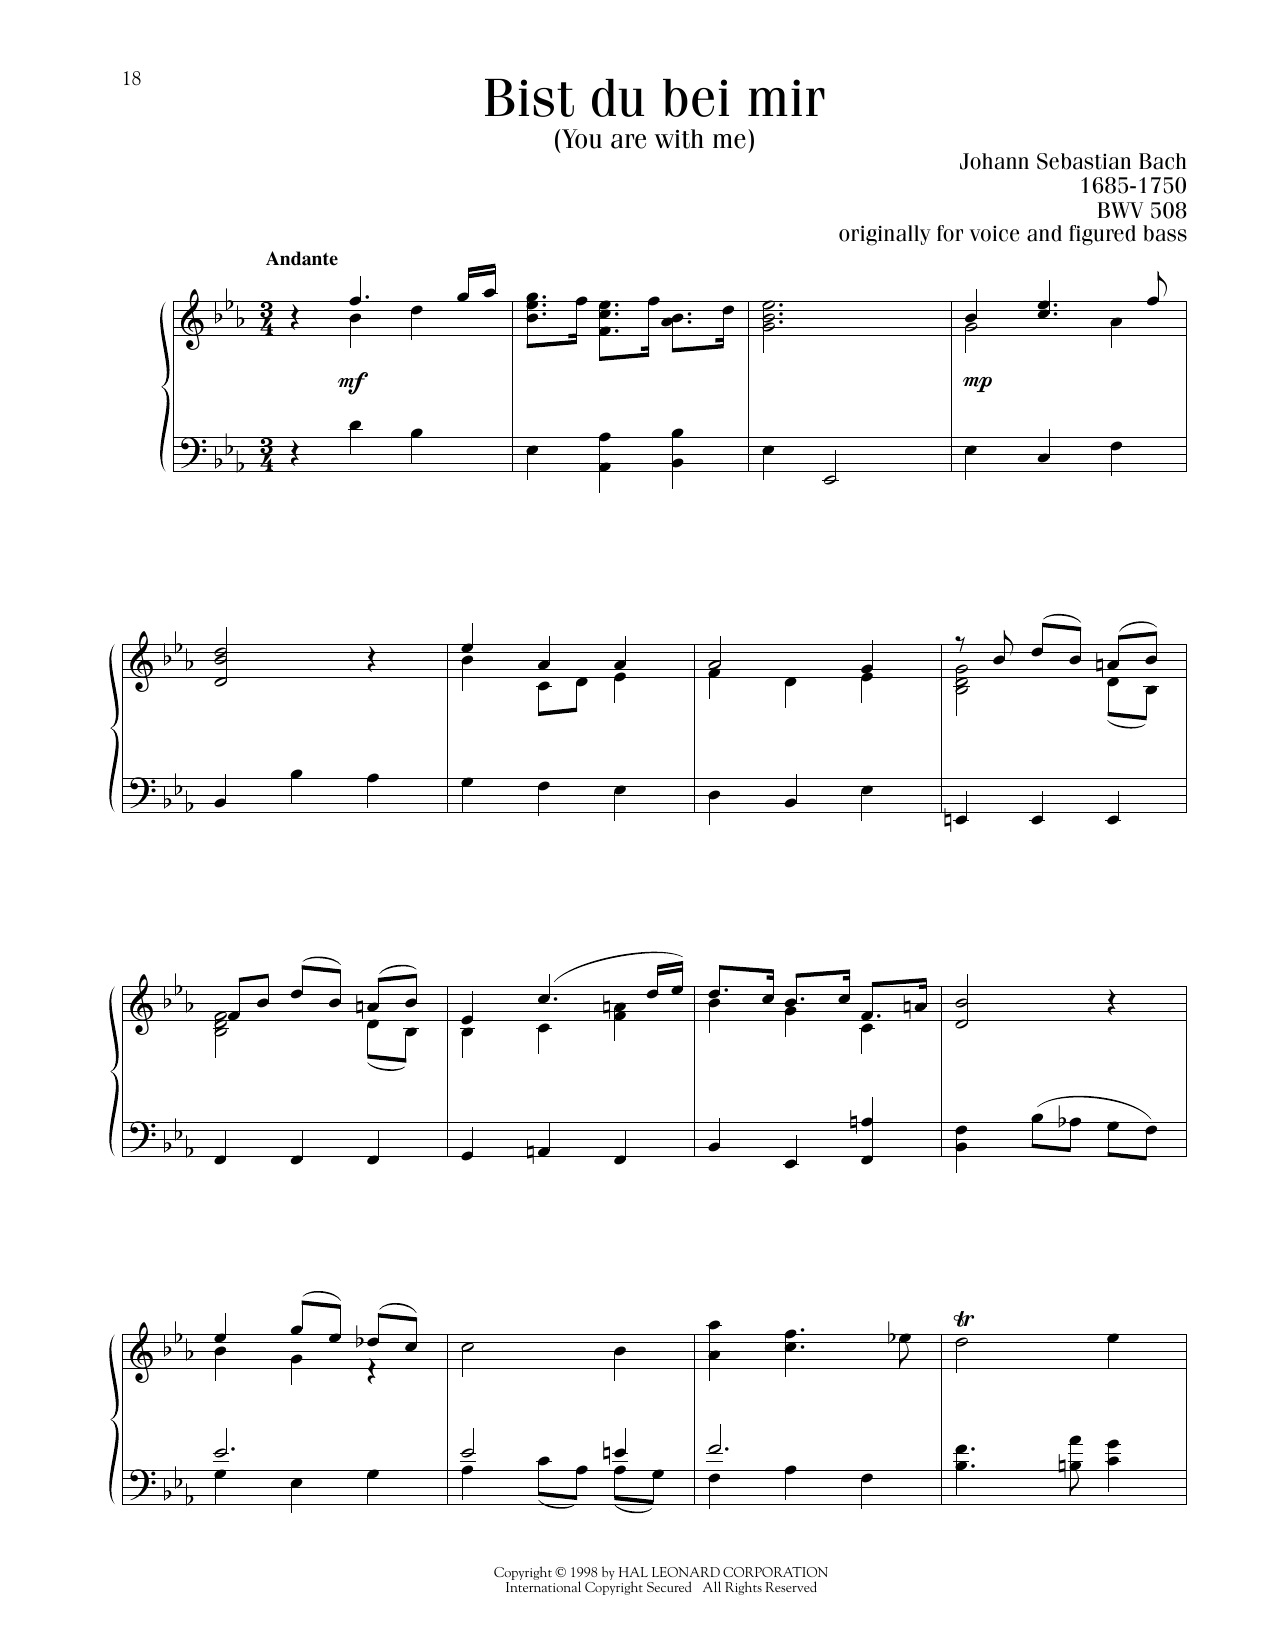 Johann Sebastian Bach Bist du bei mir (You Are With Me) sheet music notes printable PDF score